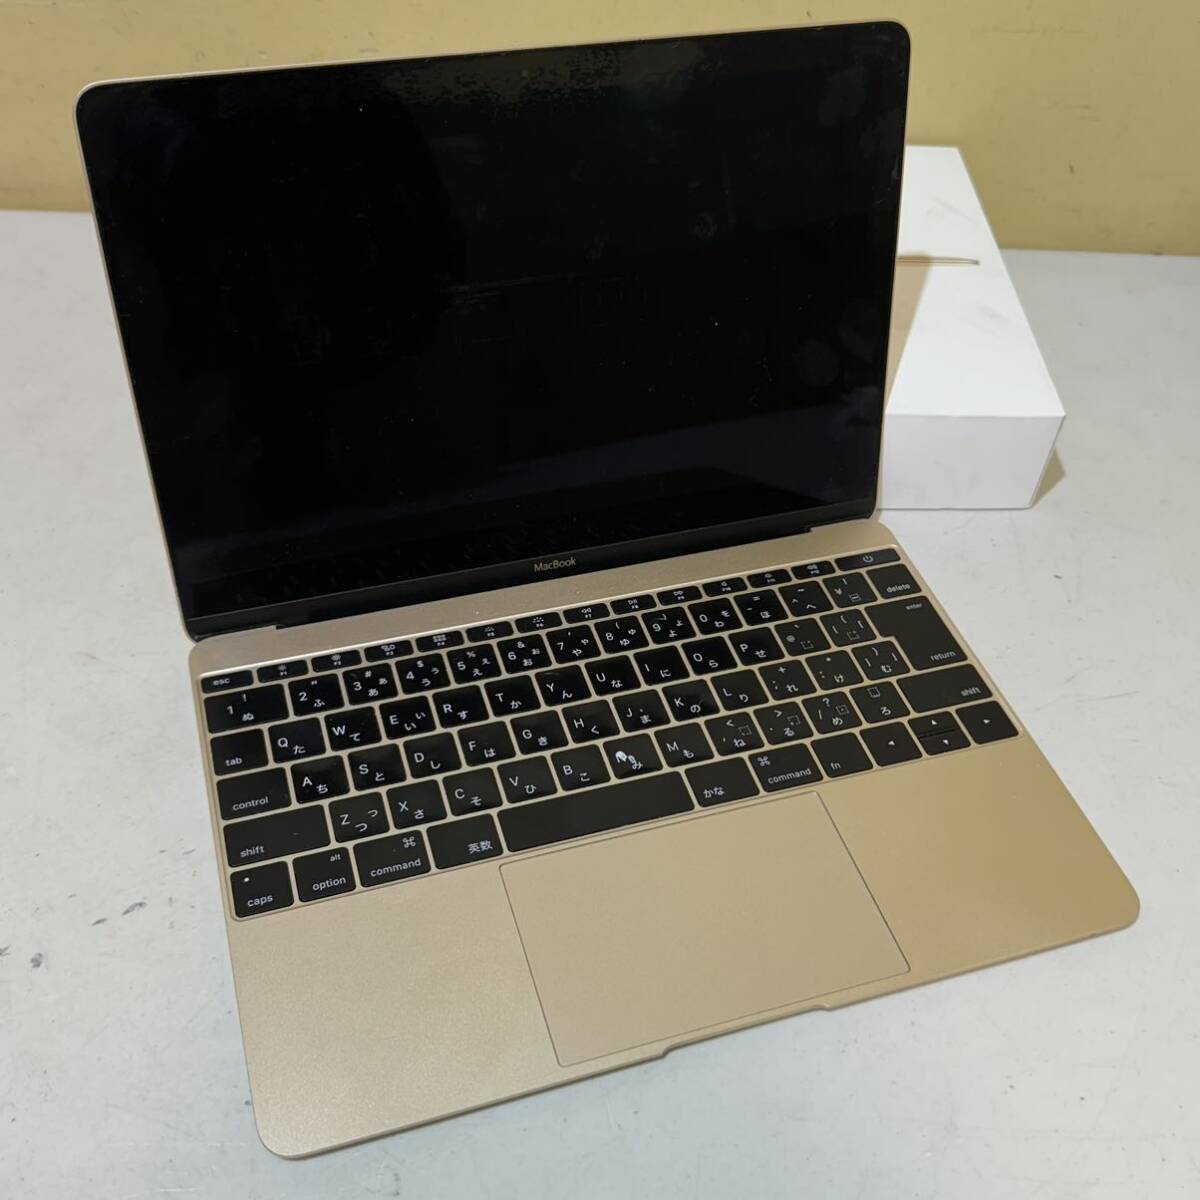 Apple Macbook A1534 12 -inch laptop Gold MLHF2J/A Core m3 1.2GHz memory 8GB SSD 512GB body box attaching Junk 